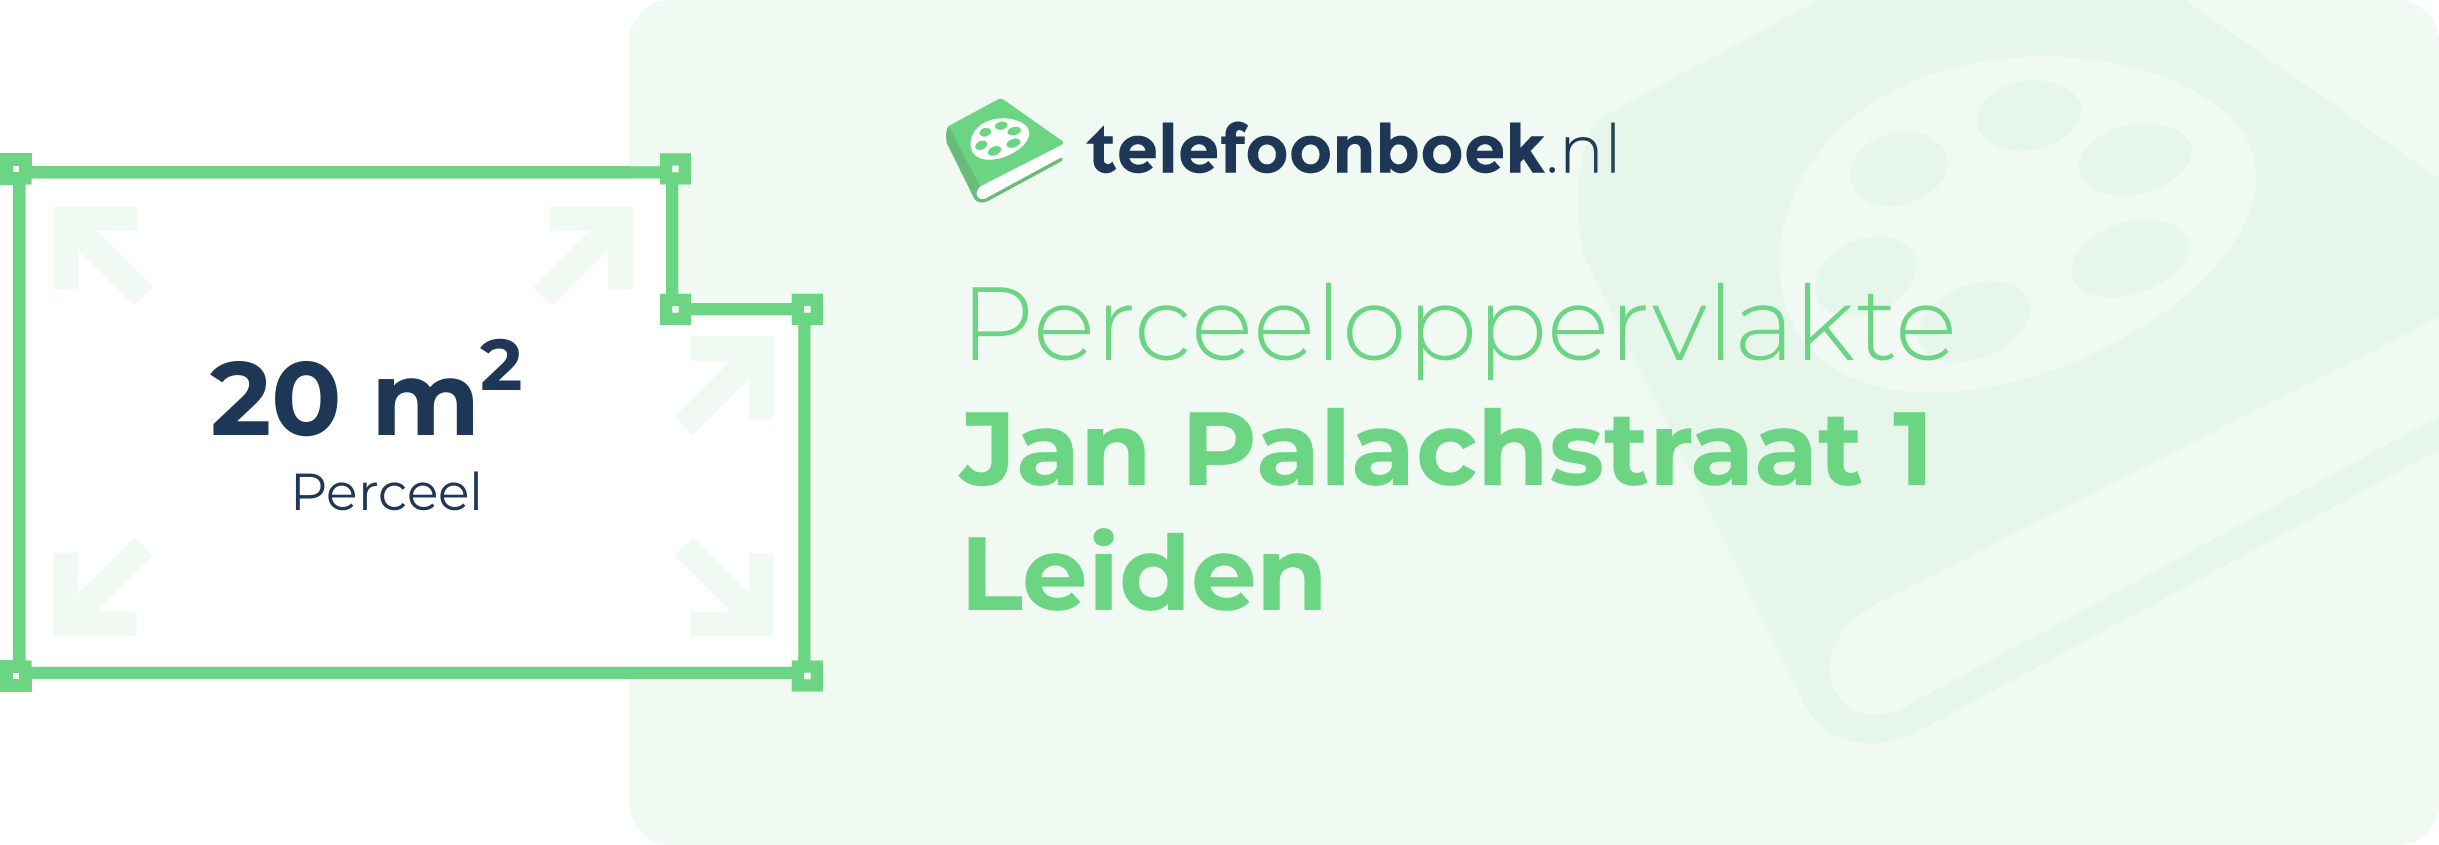 Perceeloppervlakte Jan Palachstraat 1 Leiden